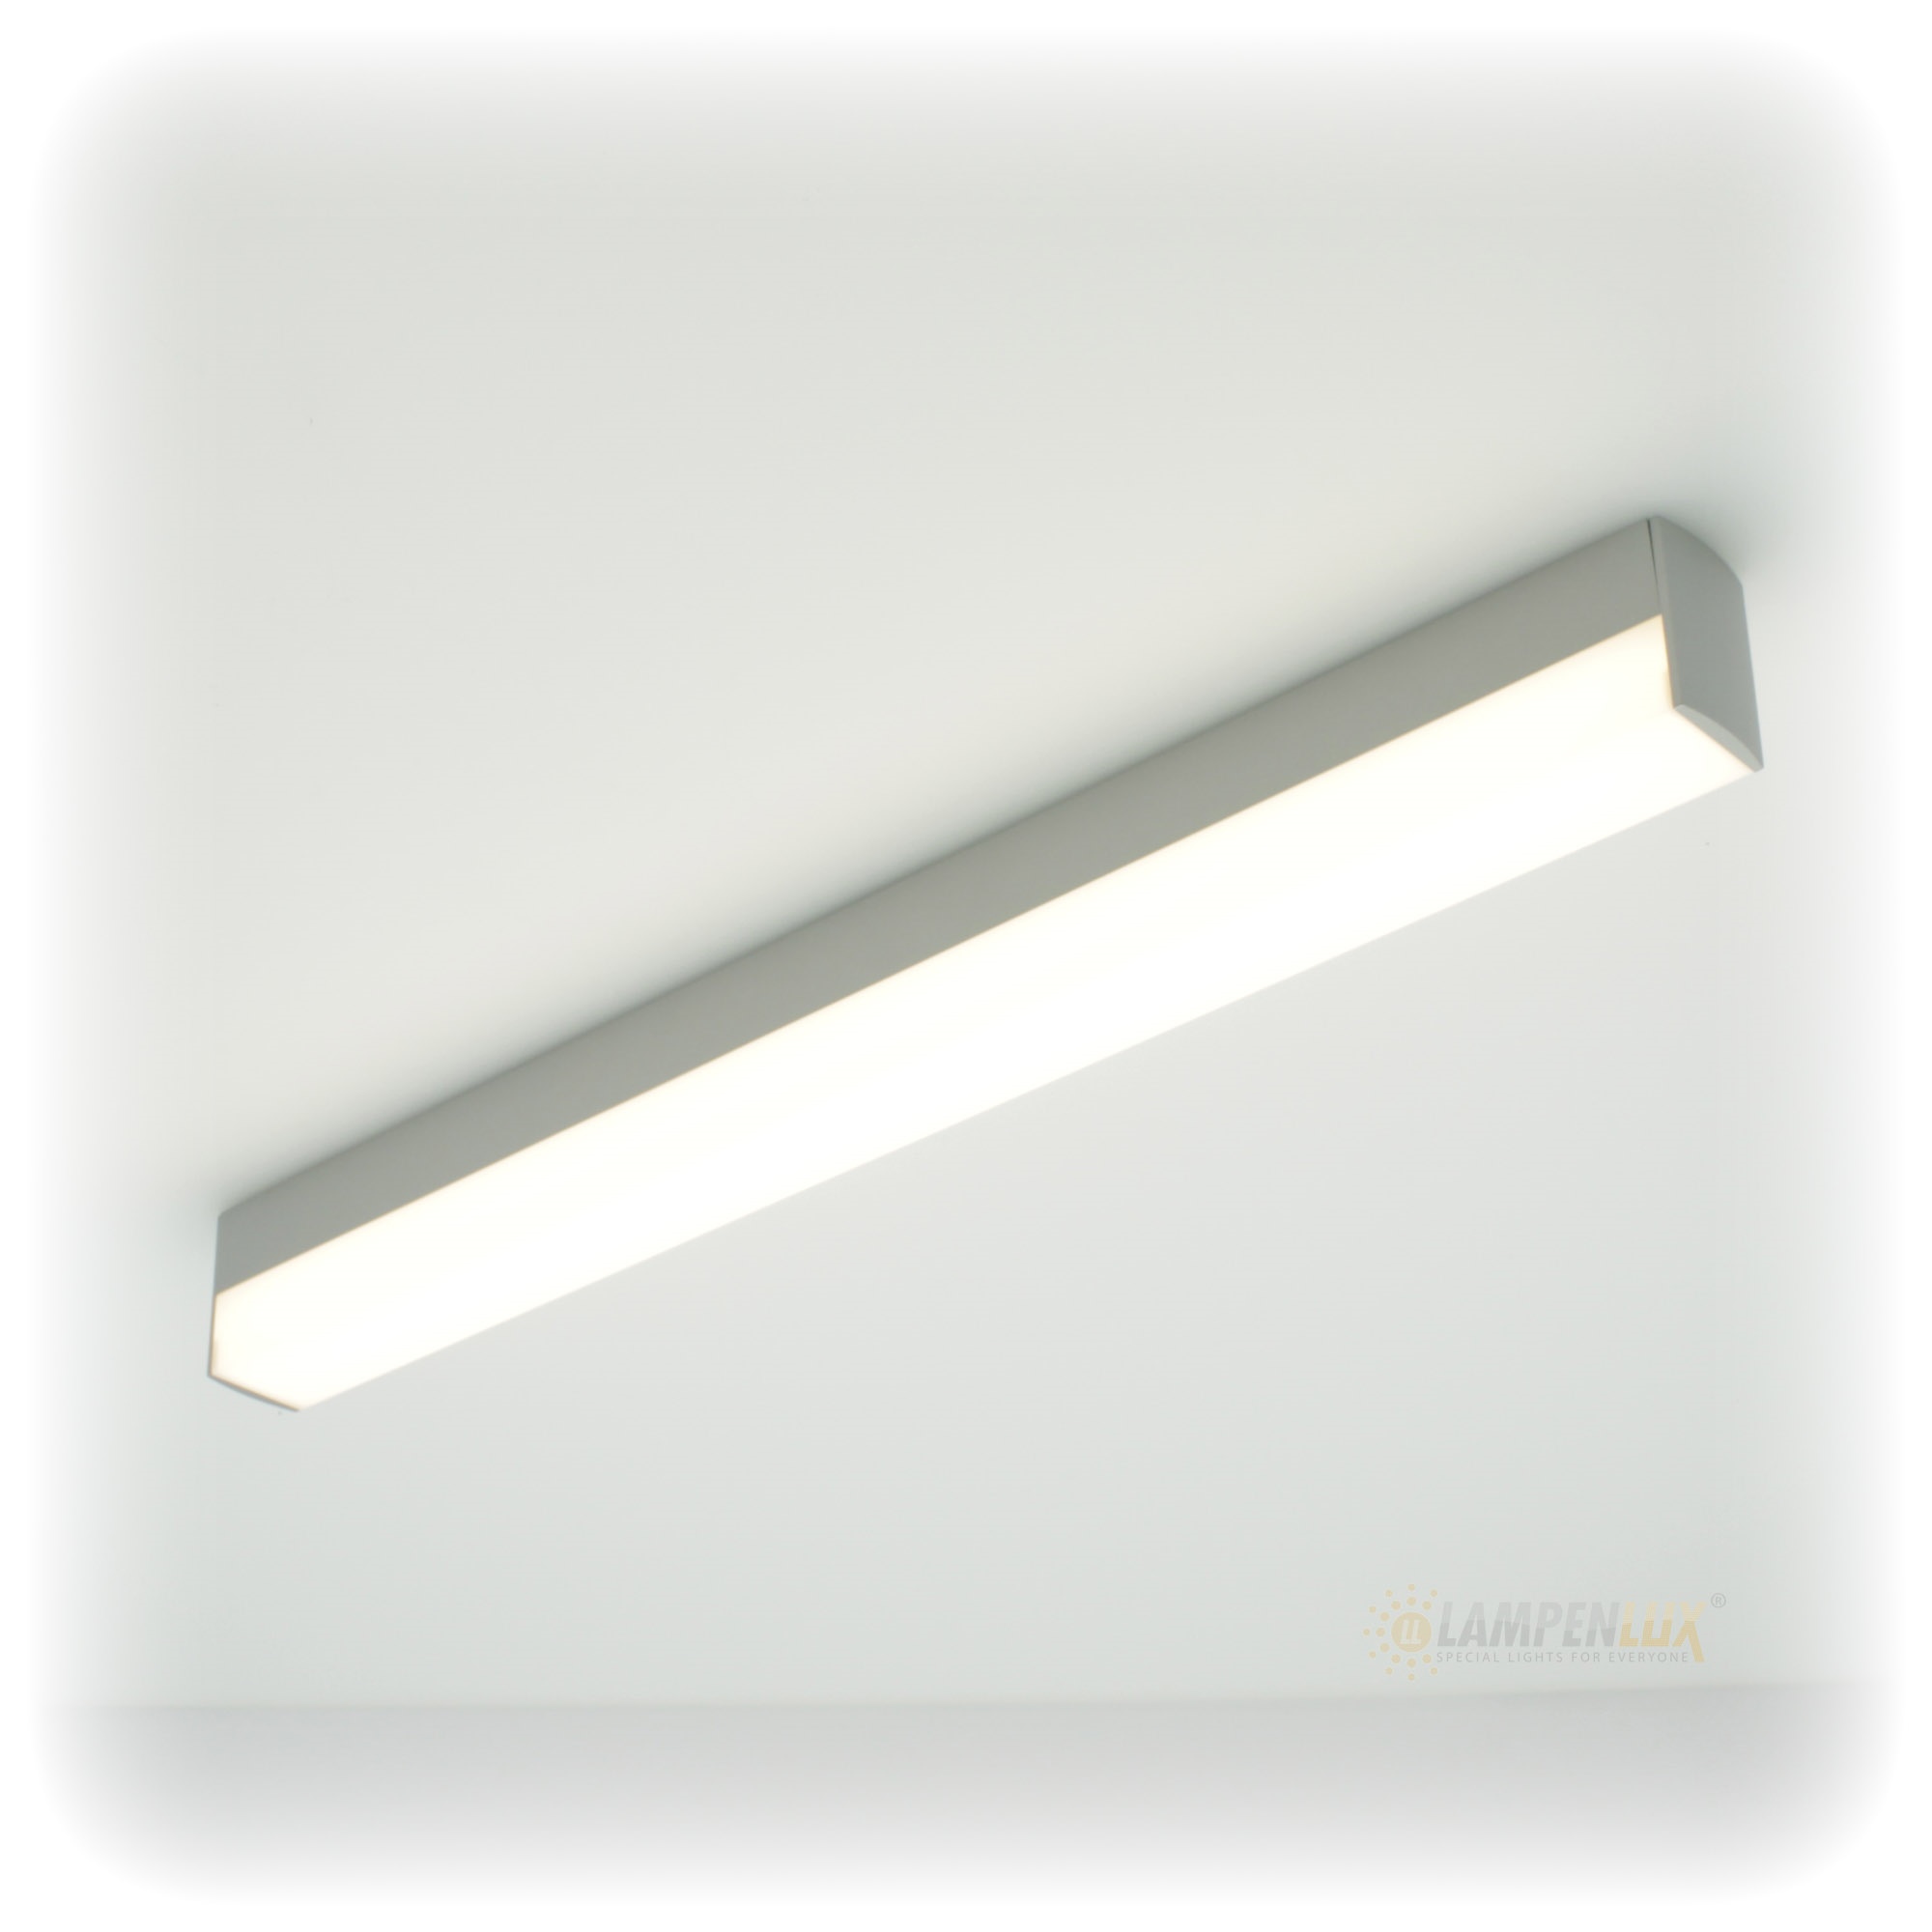 Lampenlux LED Wandlampe Wandleuchte Aaron Badlicht grau 14W 53cm inkl. LM